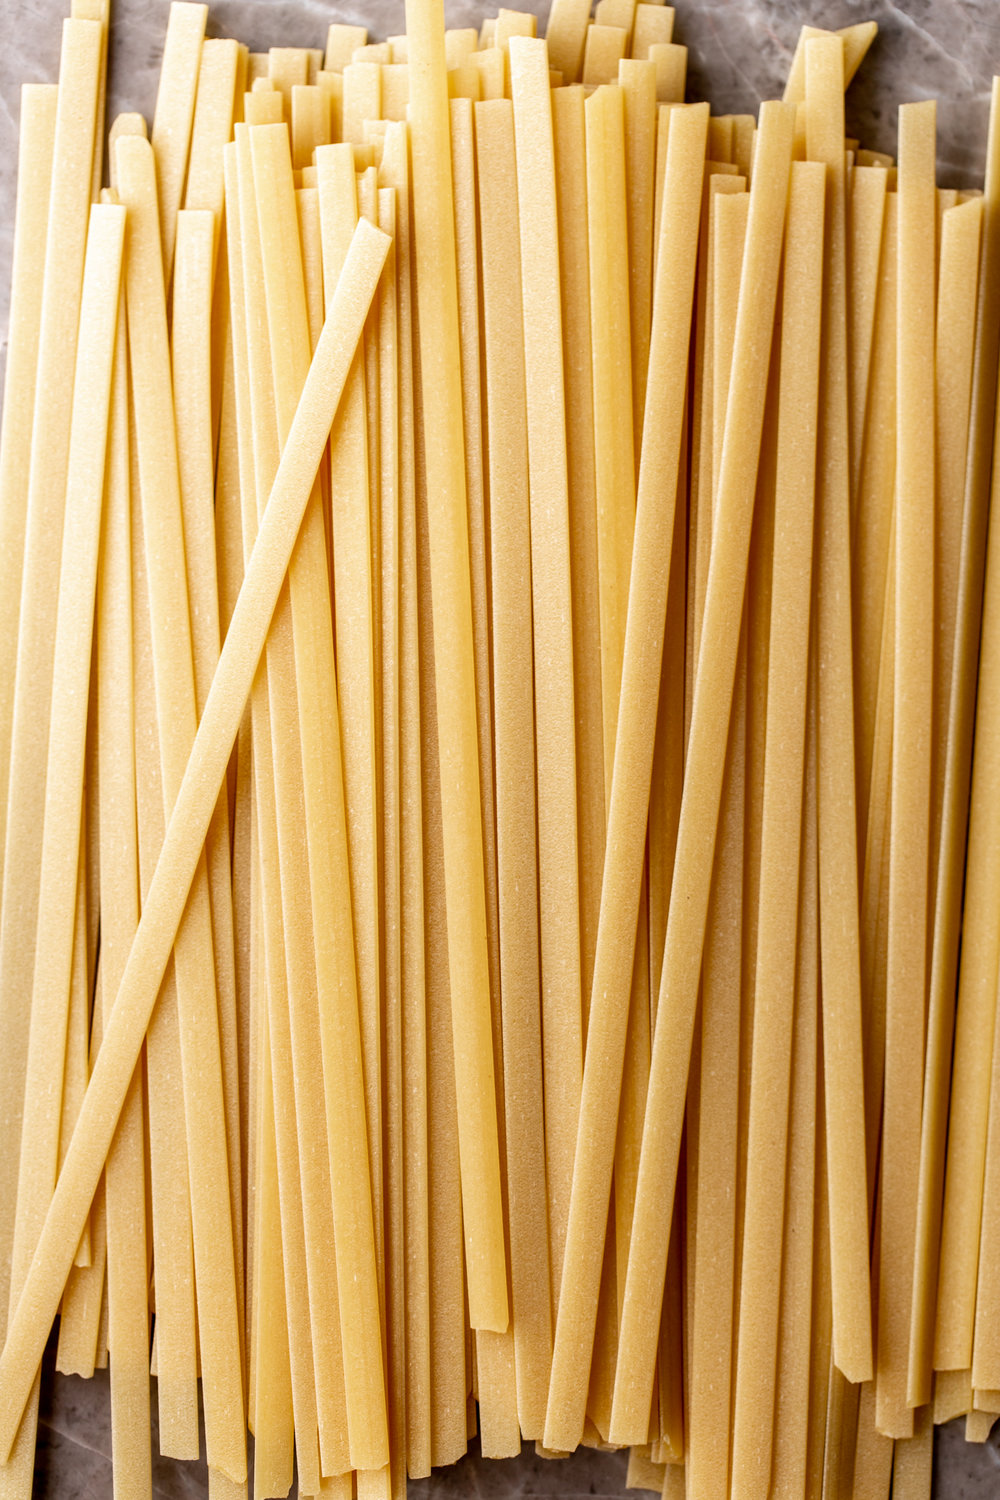 fettuccine dried pasta